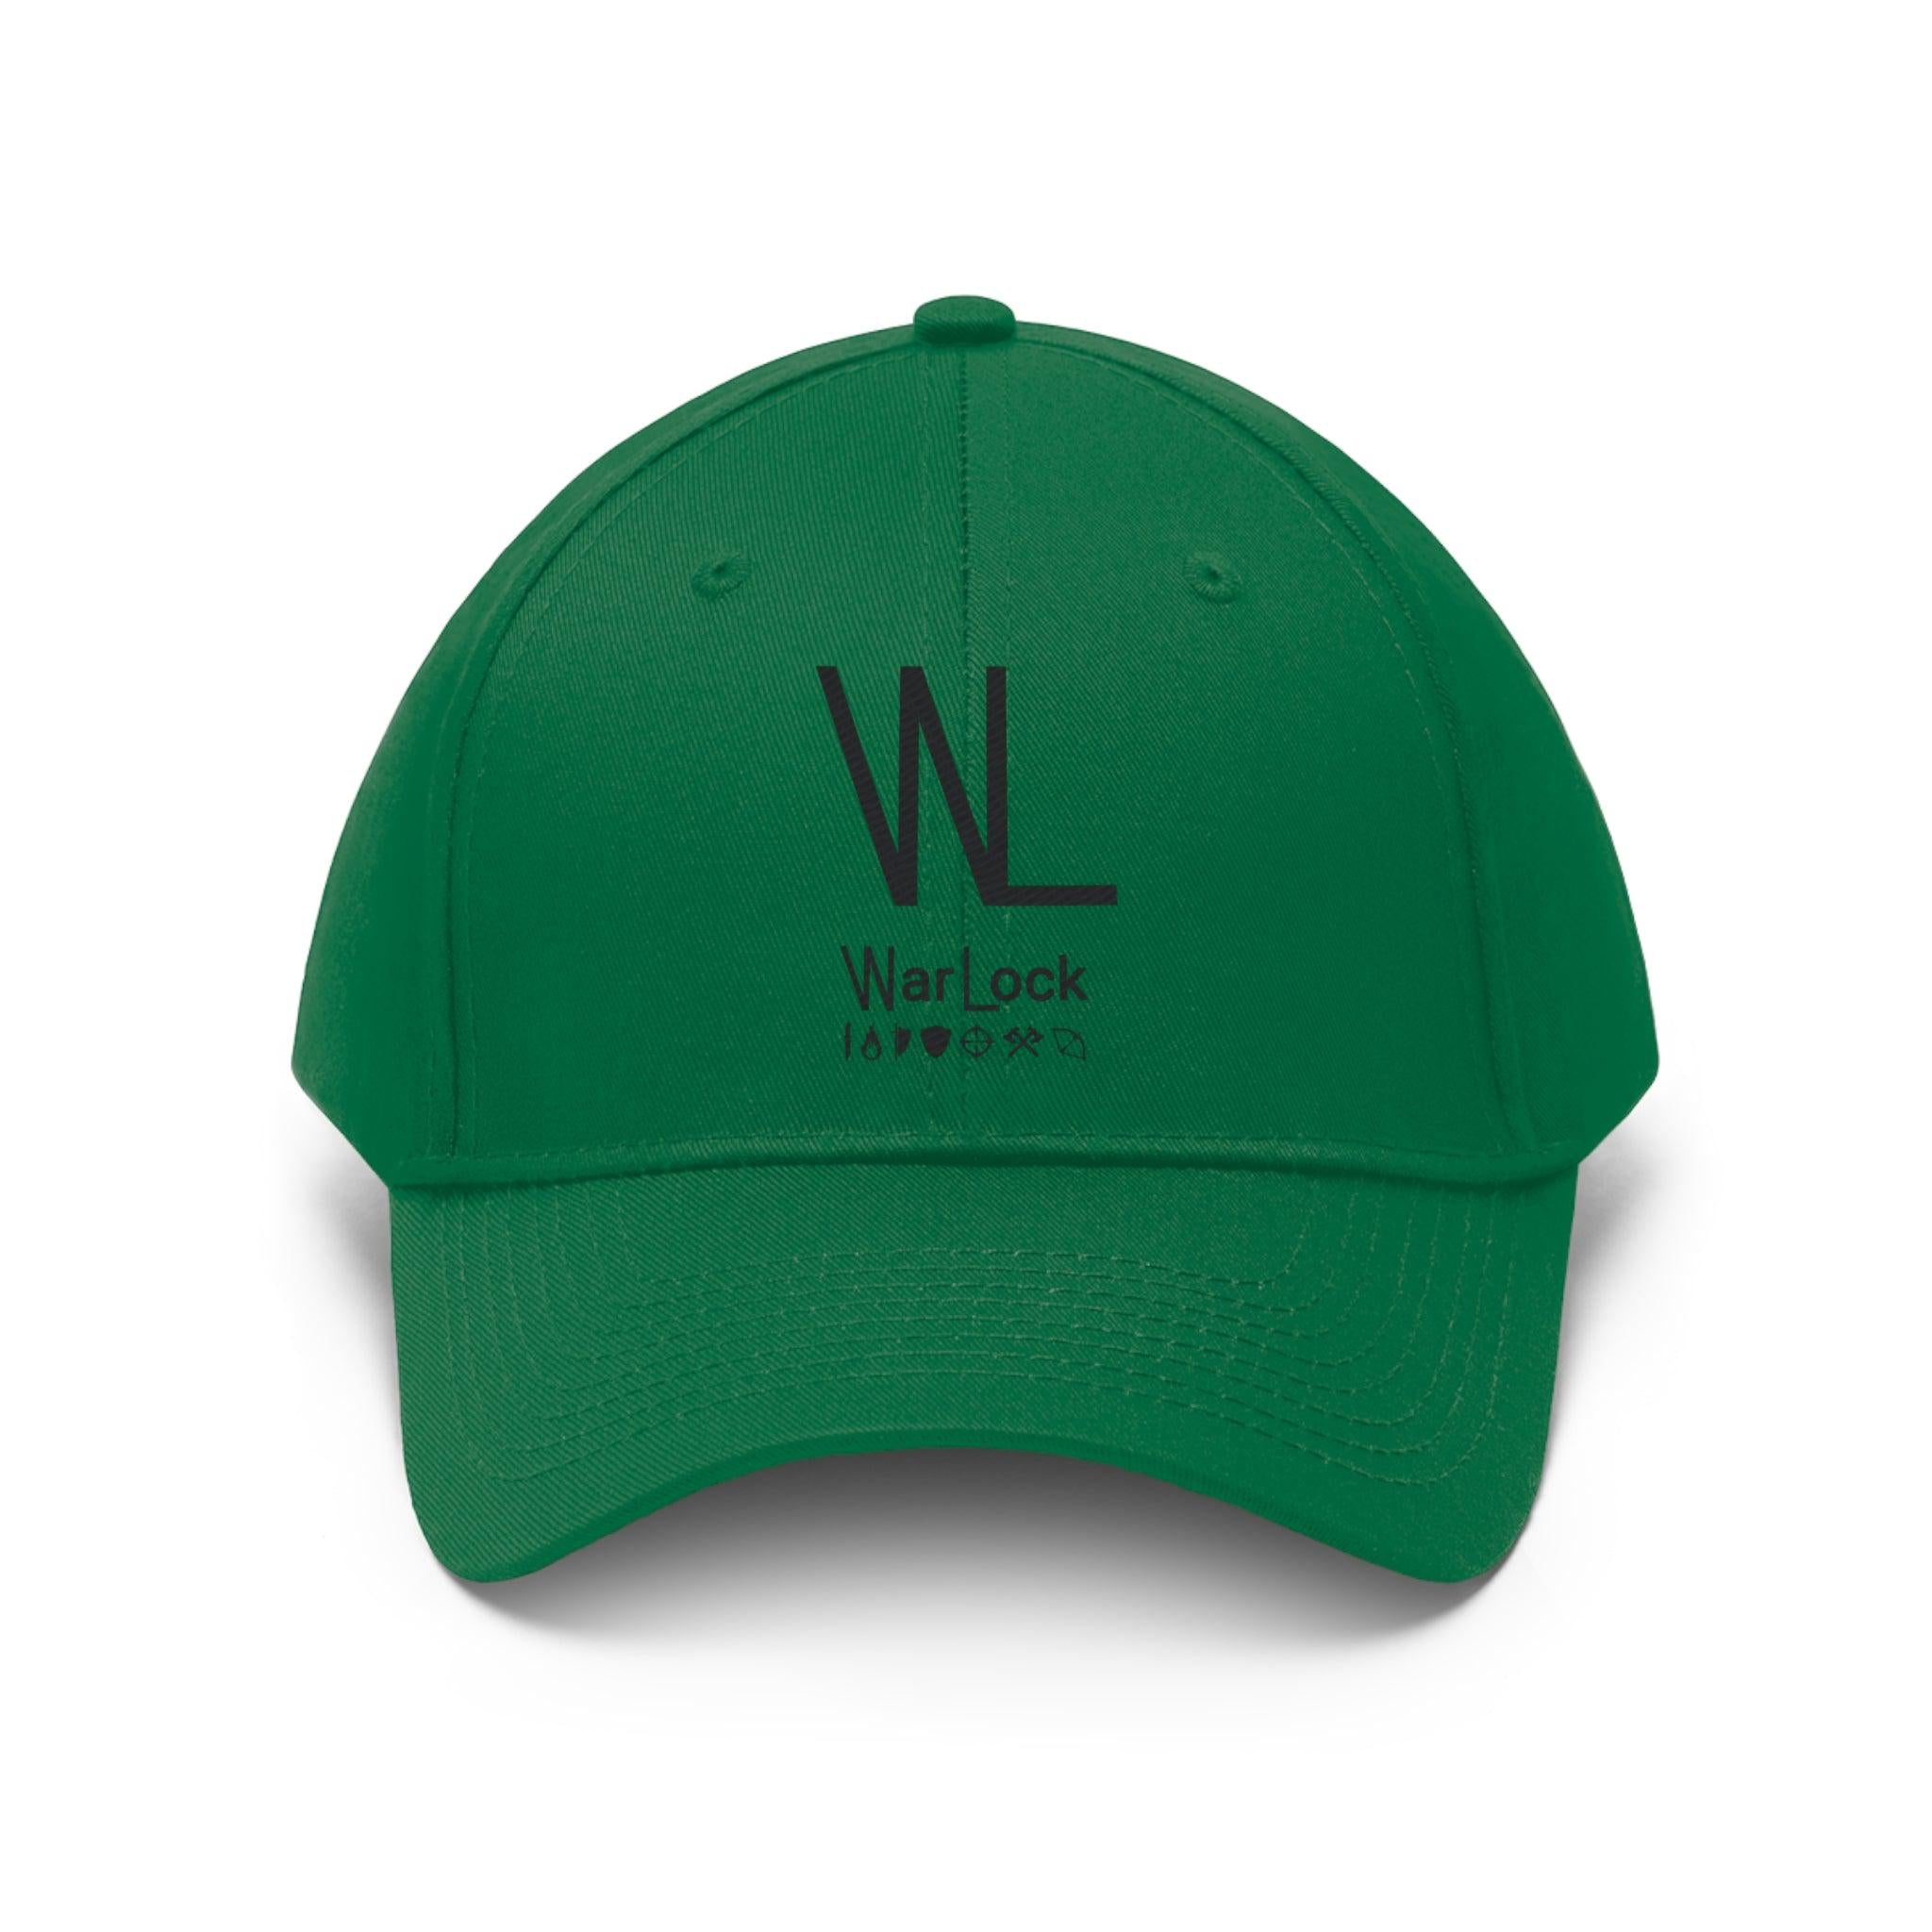 WarLock Unisex Twill Hat